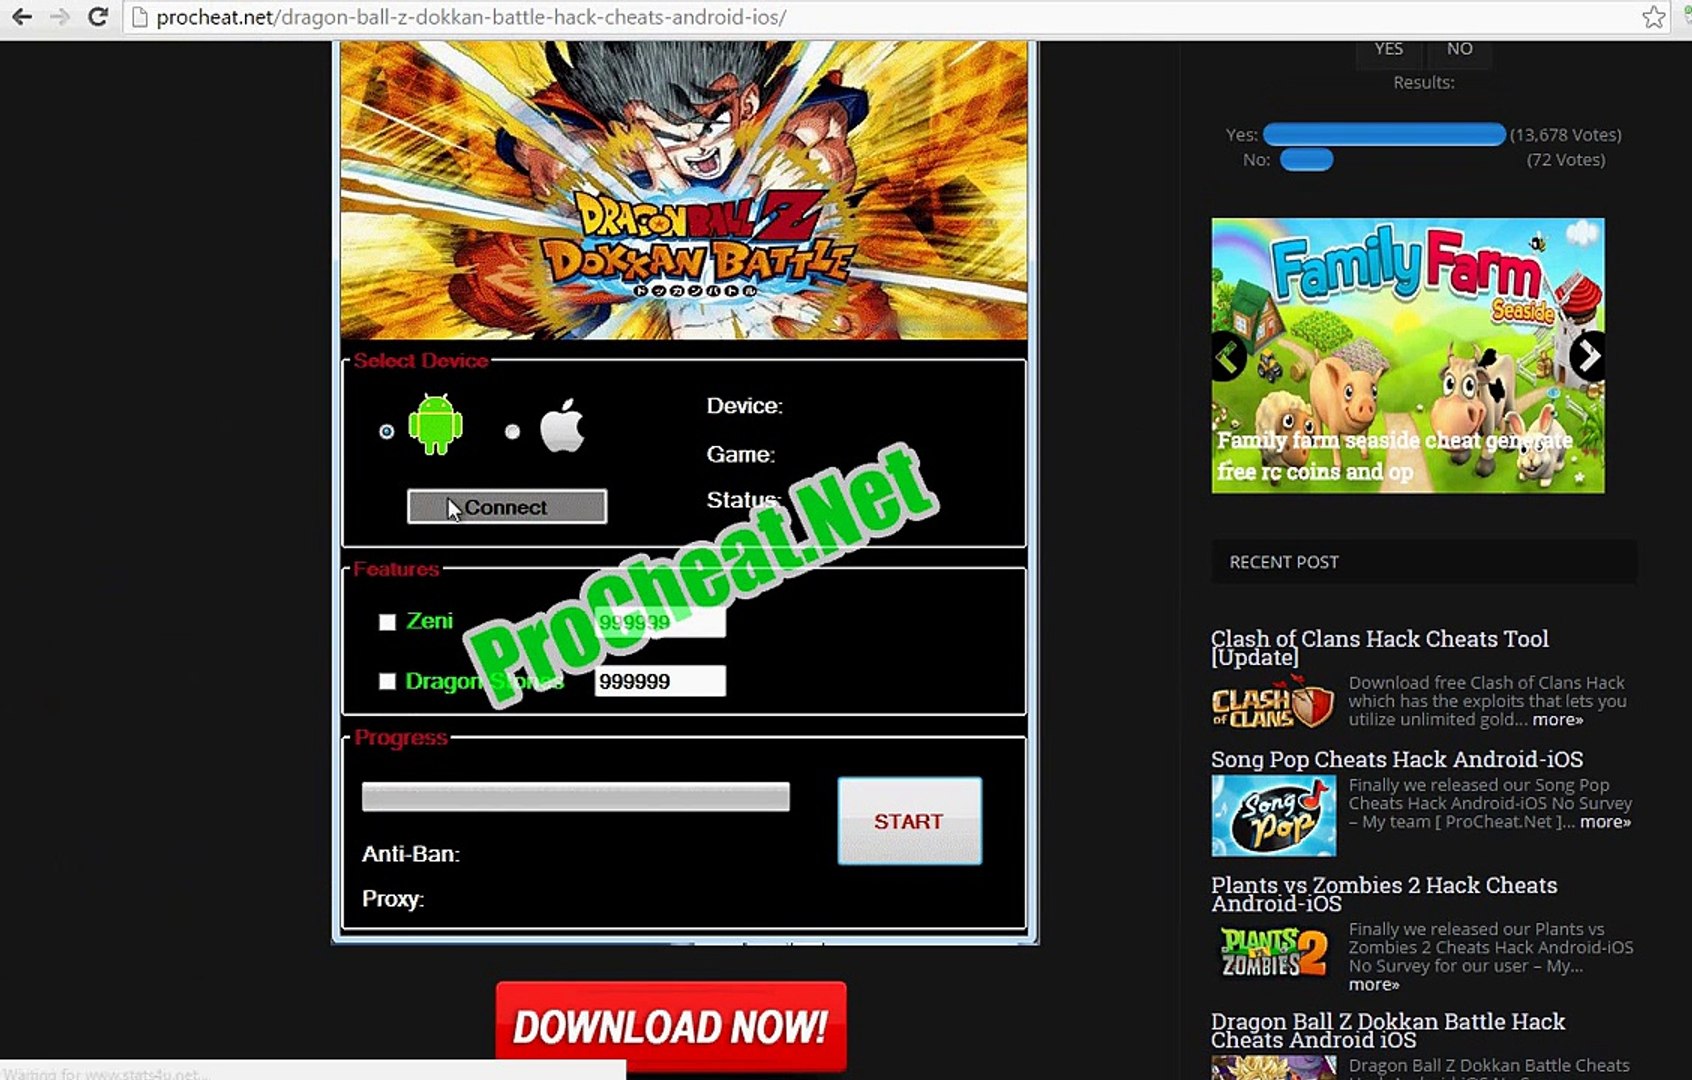 Dragon Ball Z Dokkan Battle Cheats Android iOS - video Dailymotion